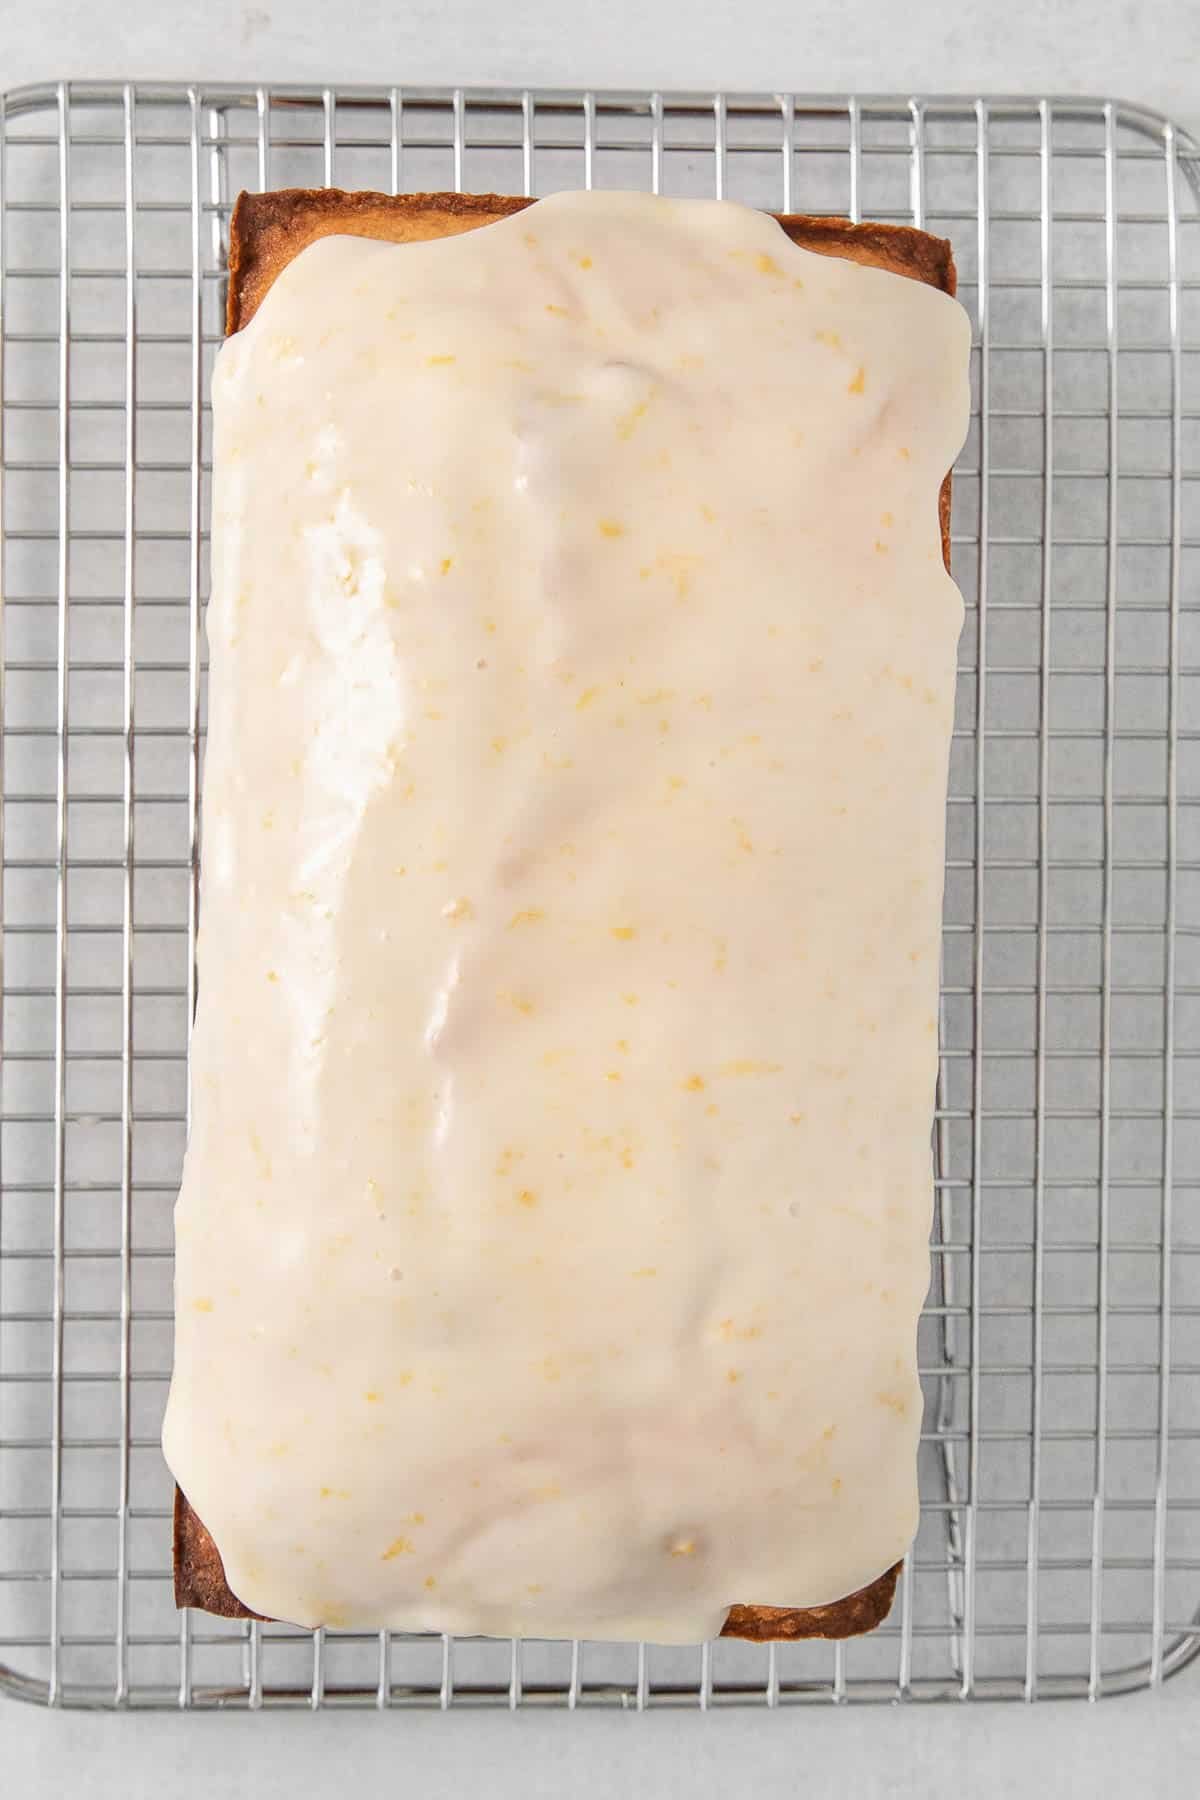 Lemon pound cake topped with lemon glaze on a wire cooling rack.